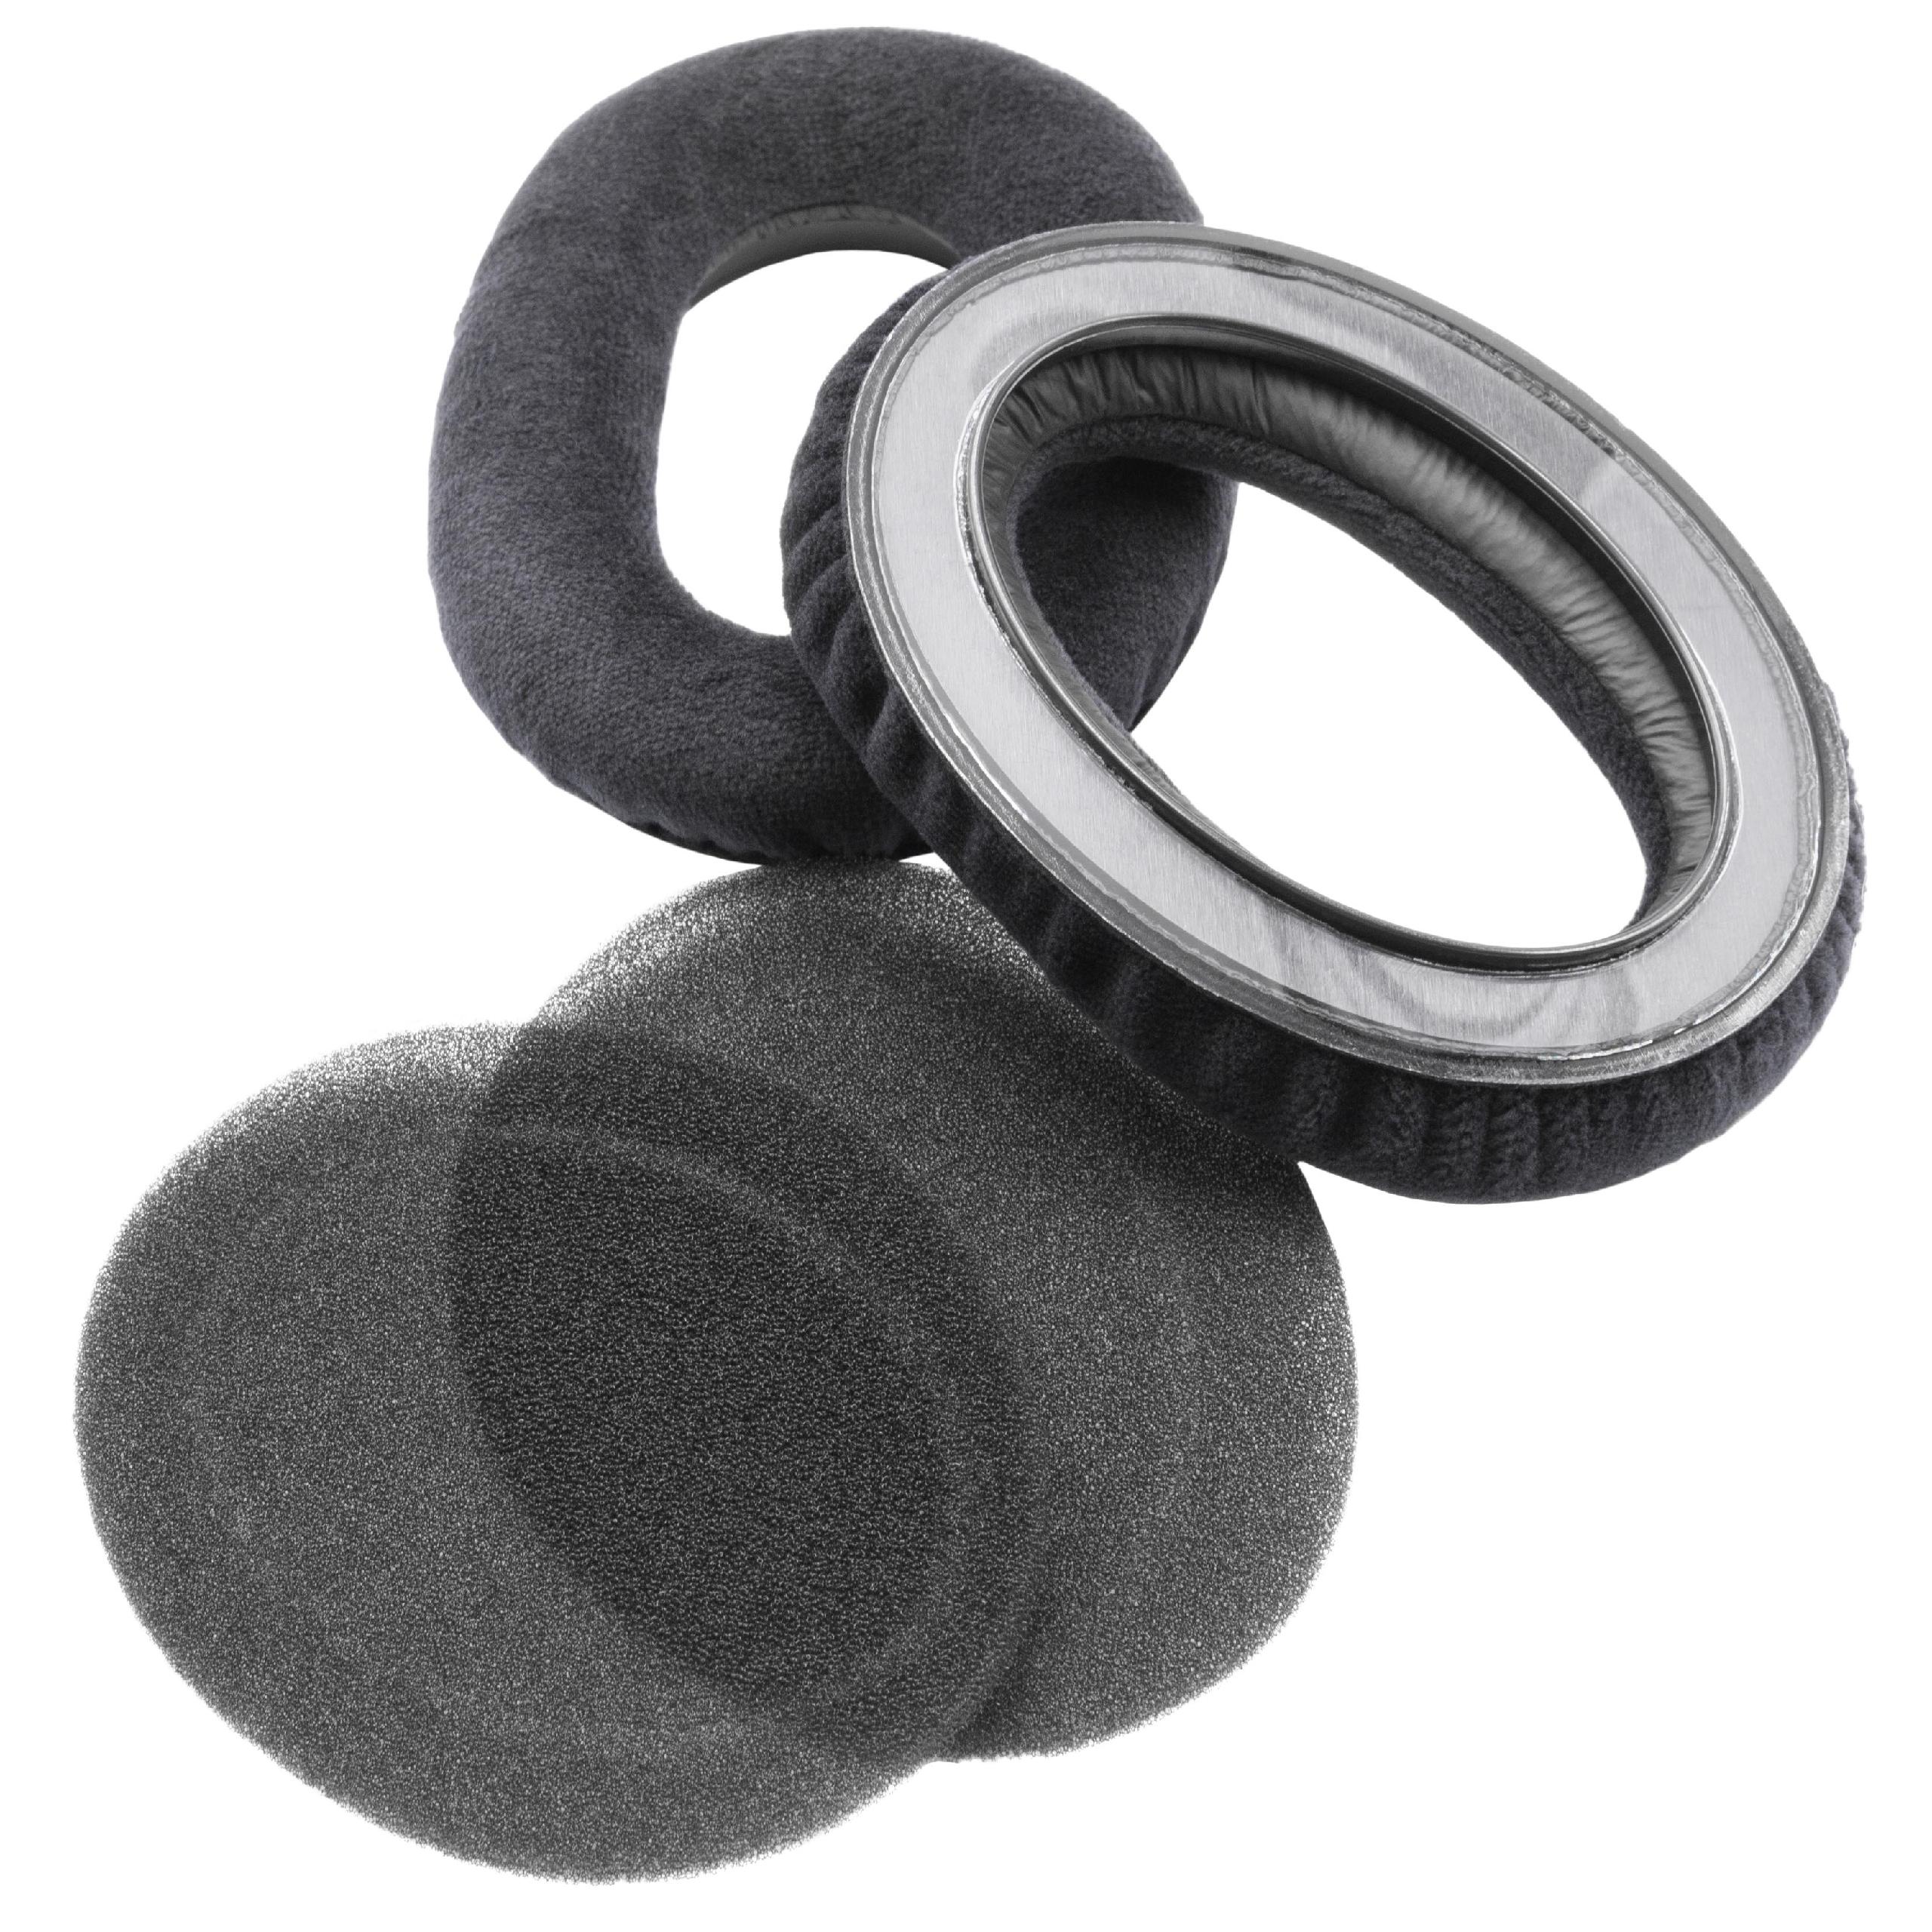 Ear Pads suitable for Sennheiser HD545 Headphones etc. - foam, 19 mm thick